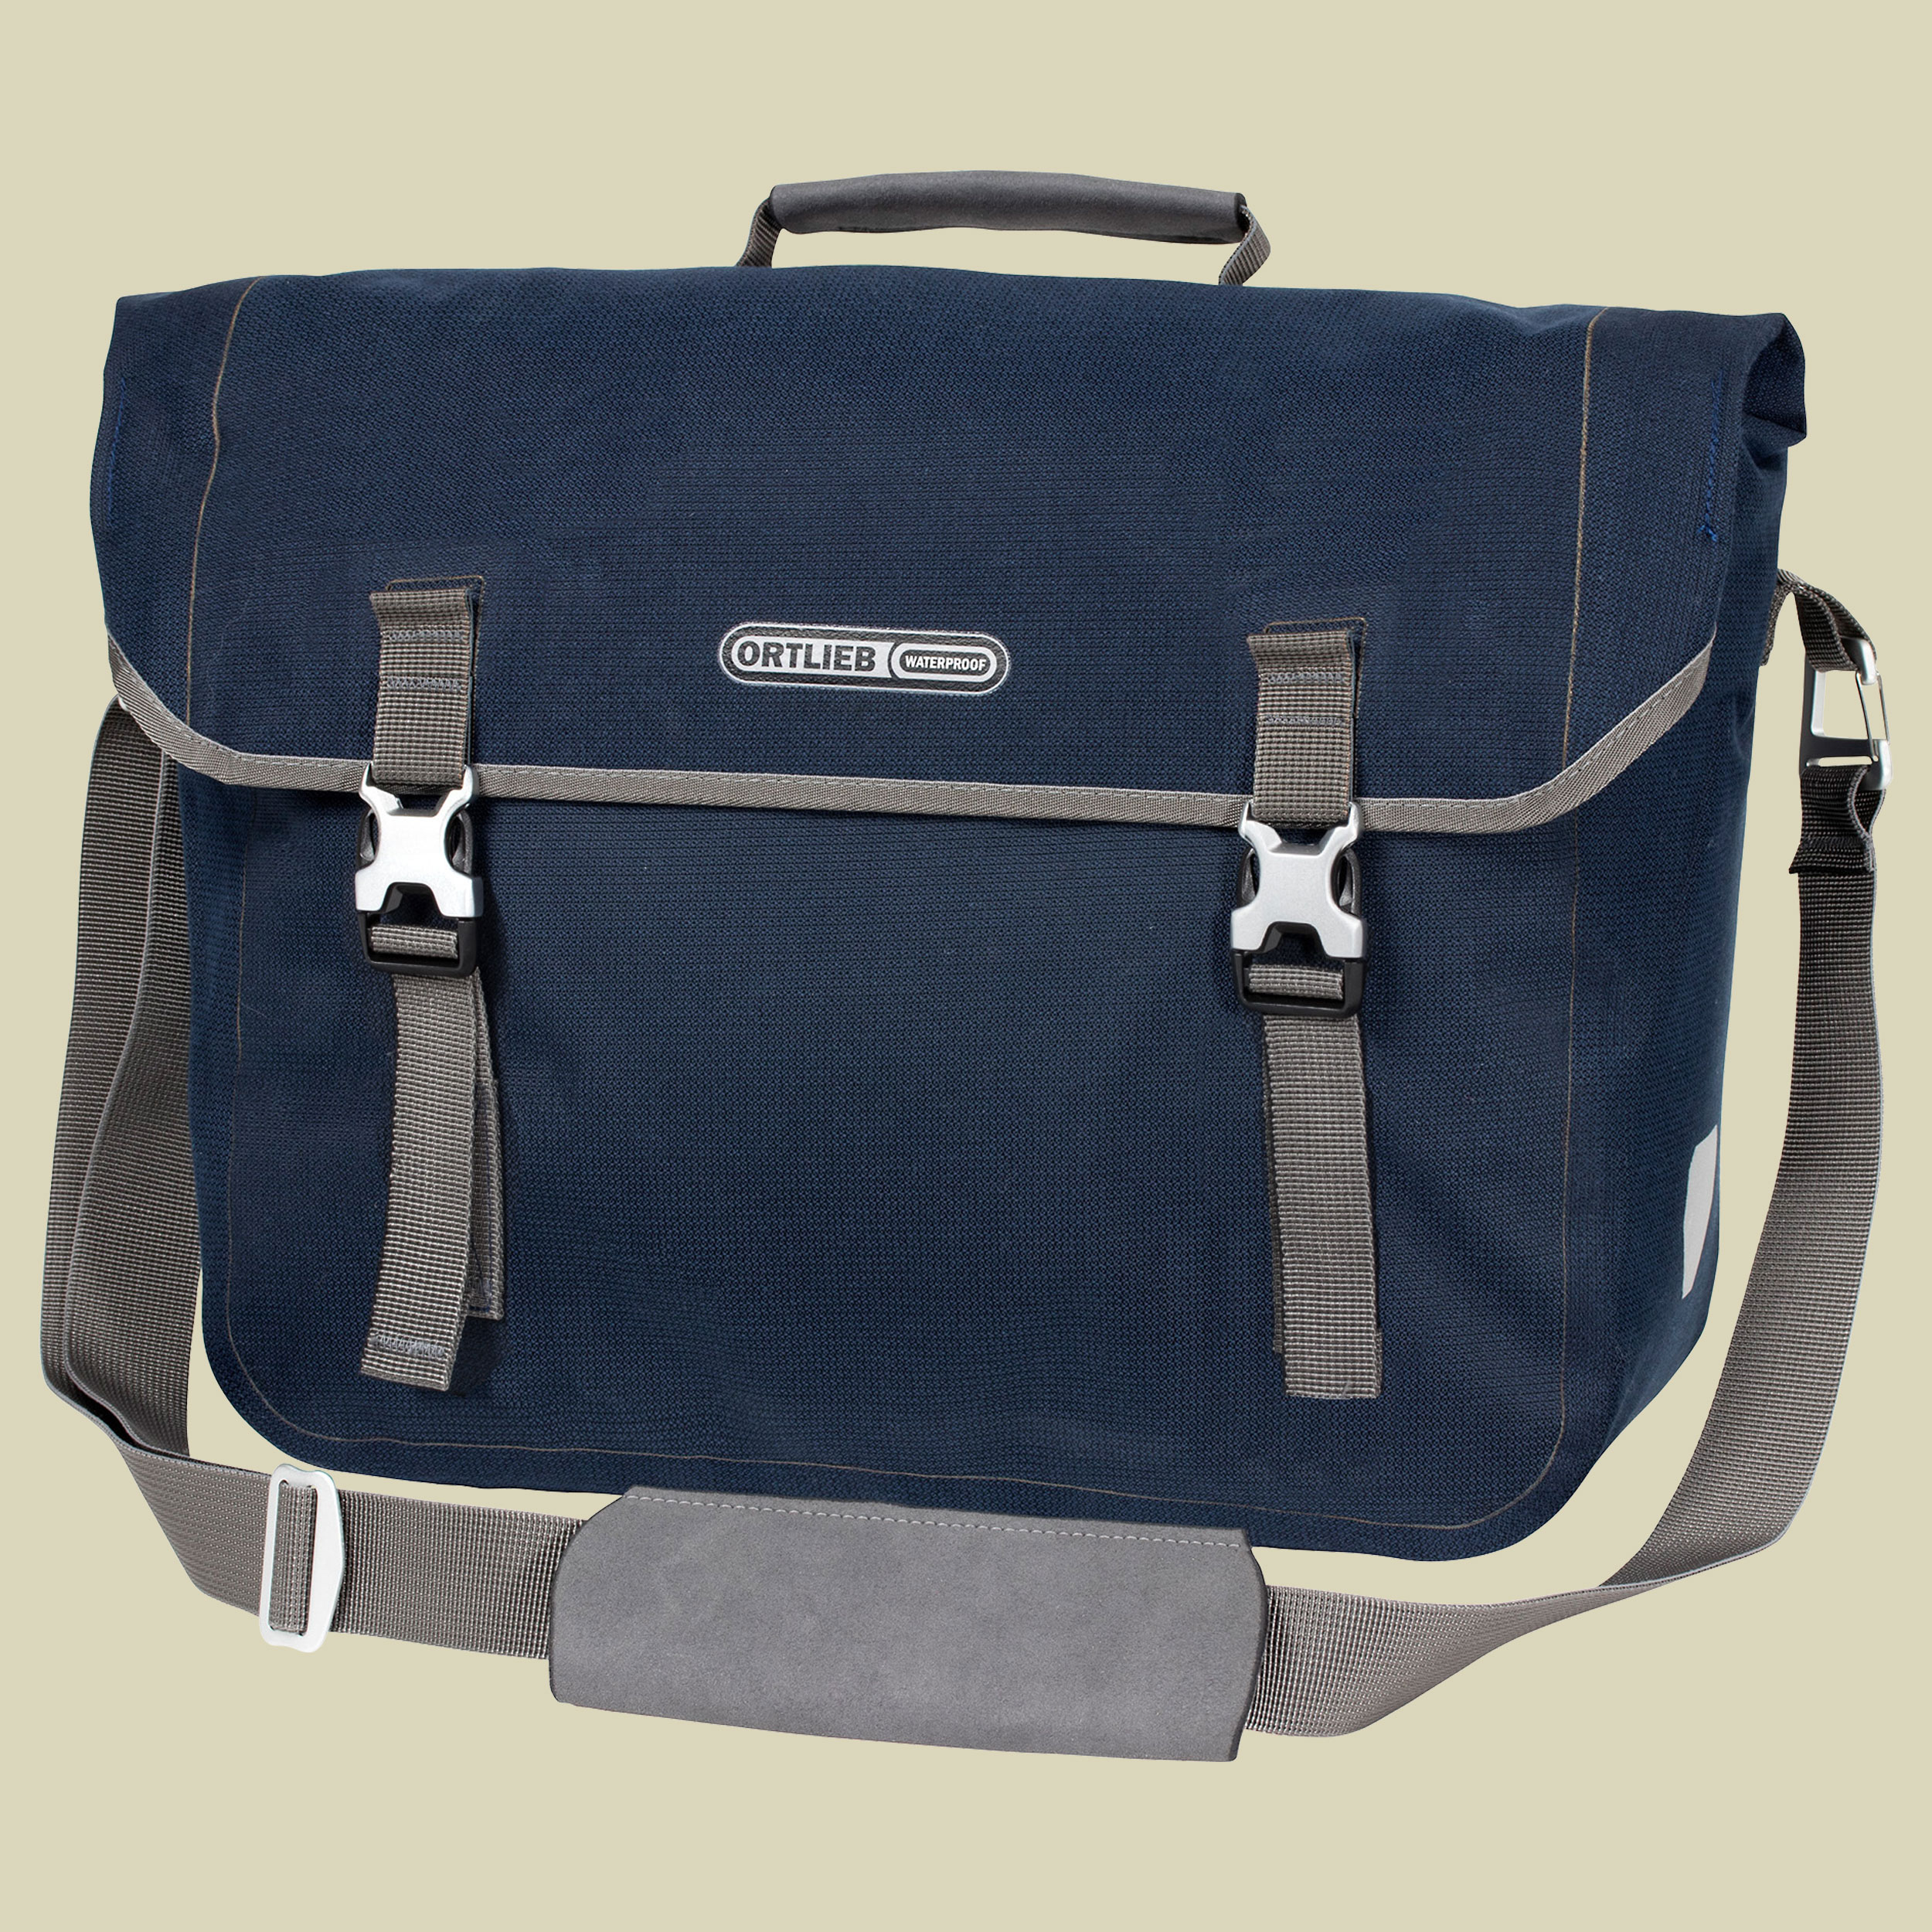 Commuter-Bag Two Urban QL3.1